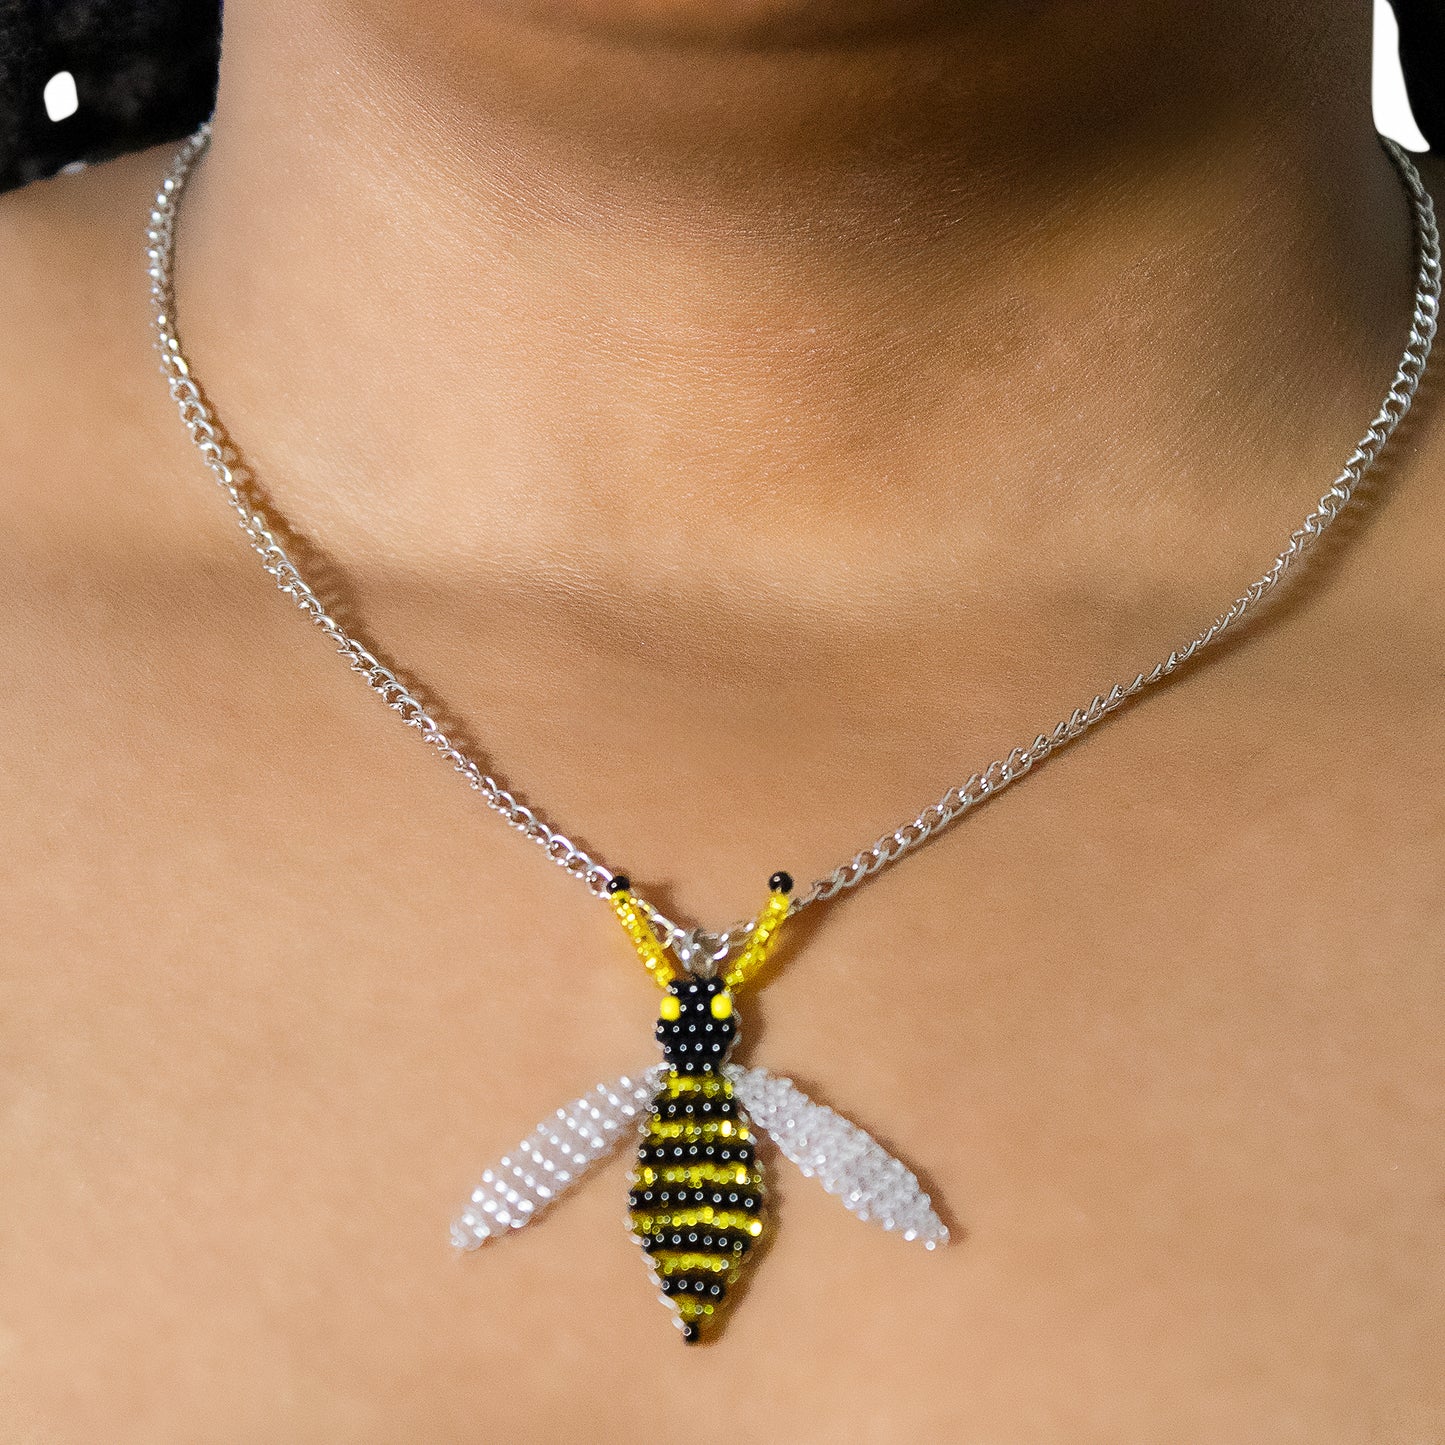 Bee pendant necklace